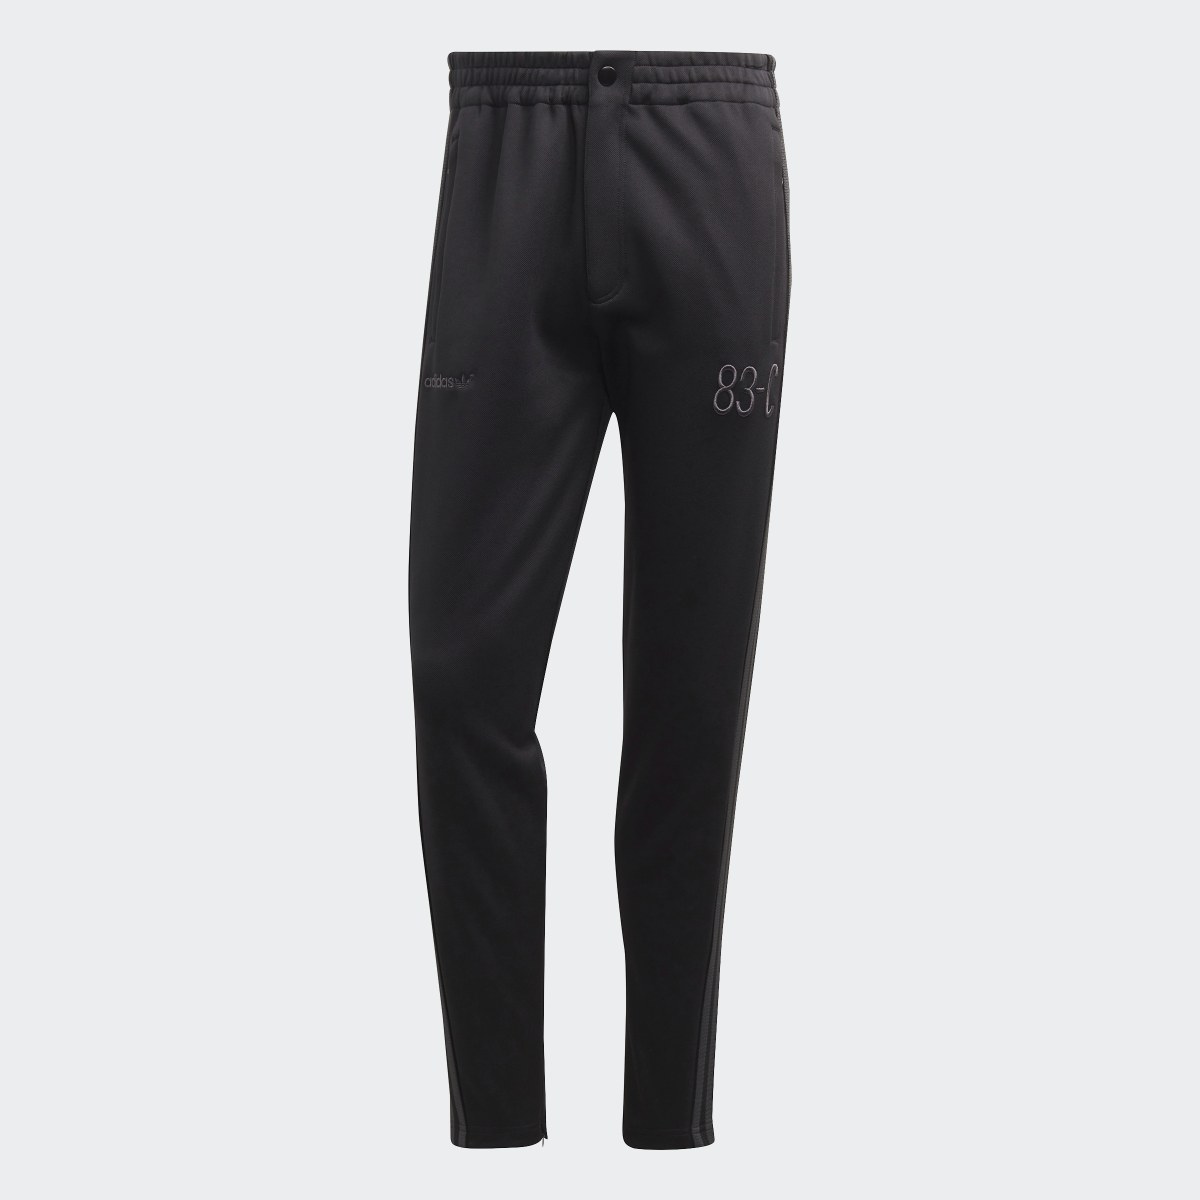 Adidas Pantalon 83-C. 4